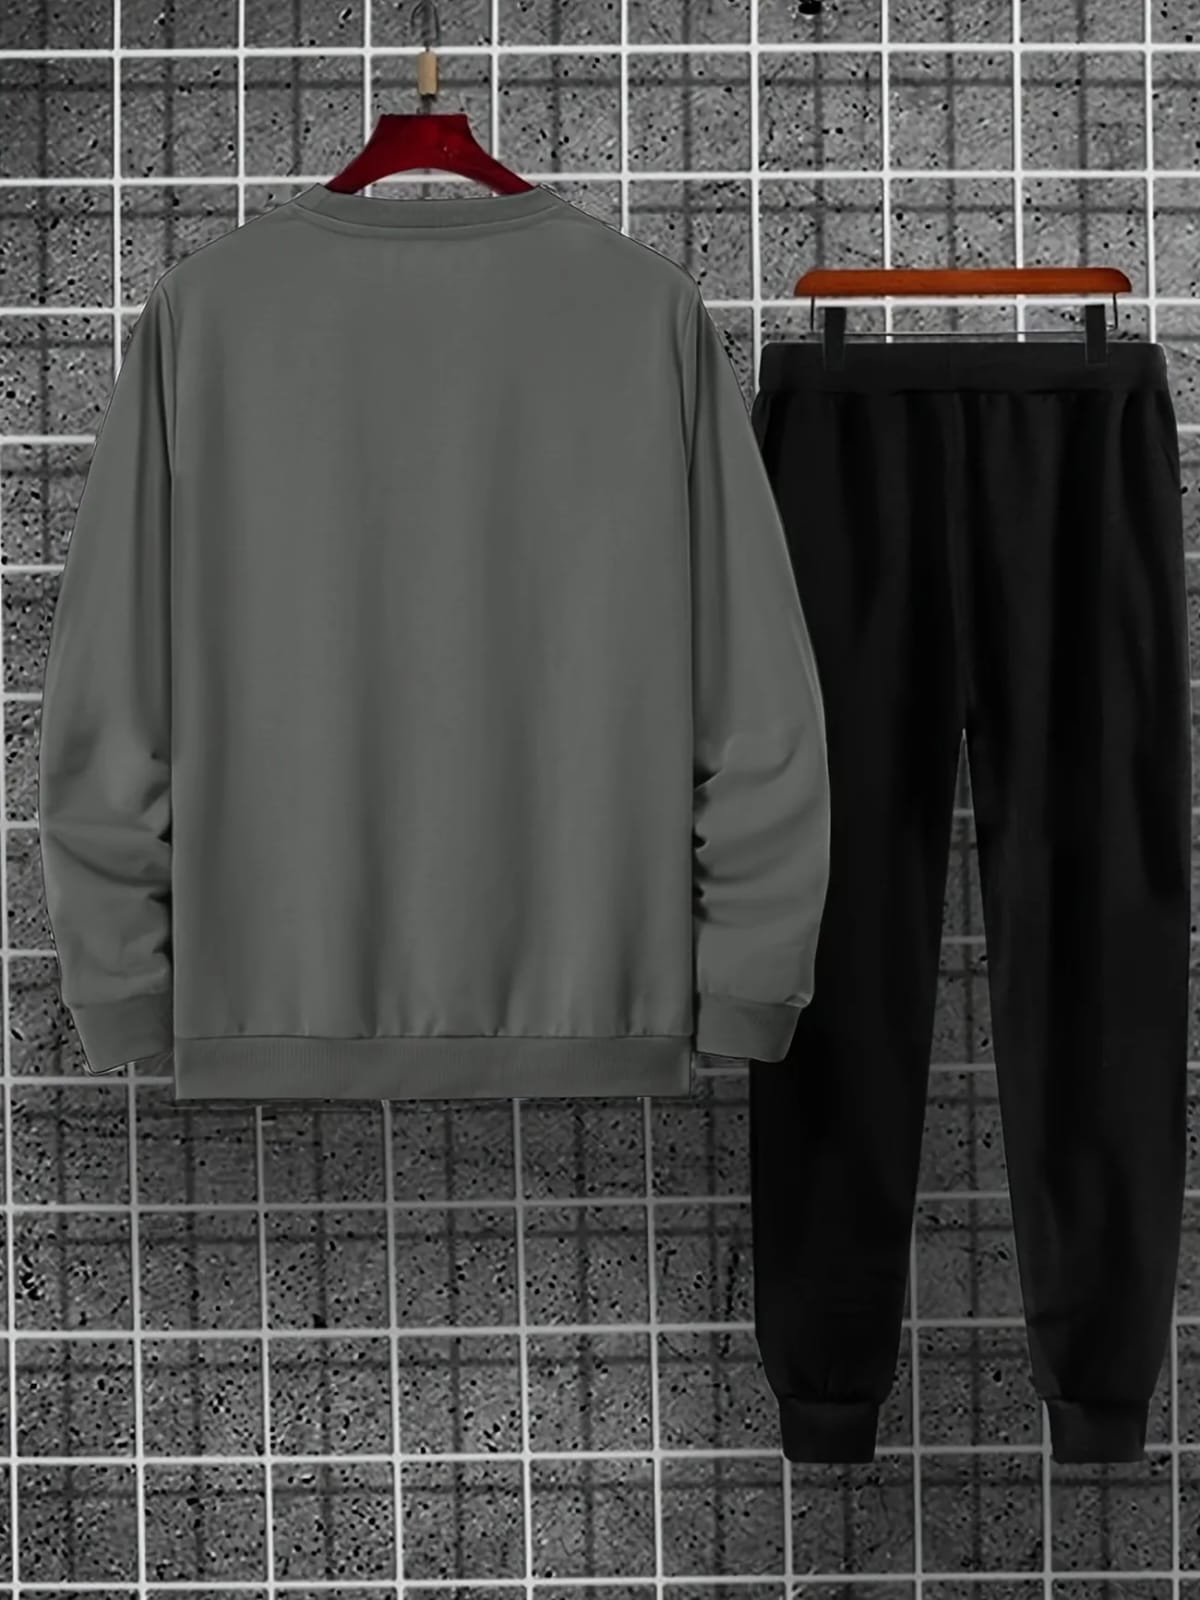 Mens Sweatshirt and Pants Set by Tee Tall - MSPSTT3 - Charcoal Black